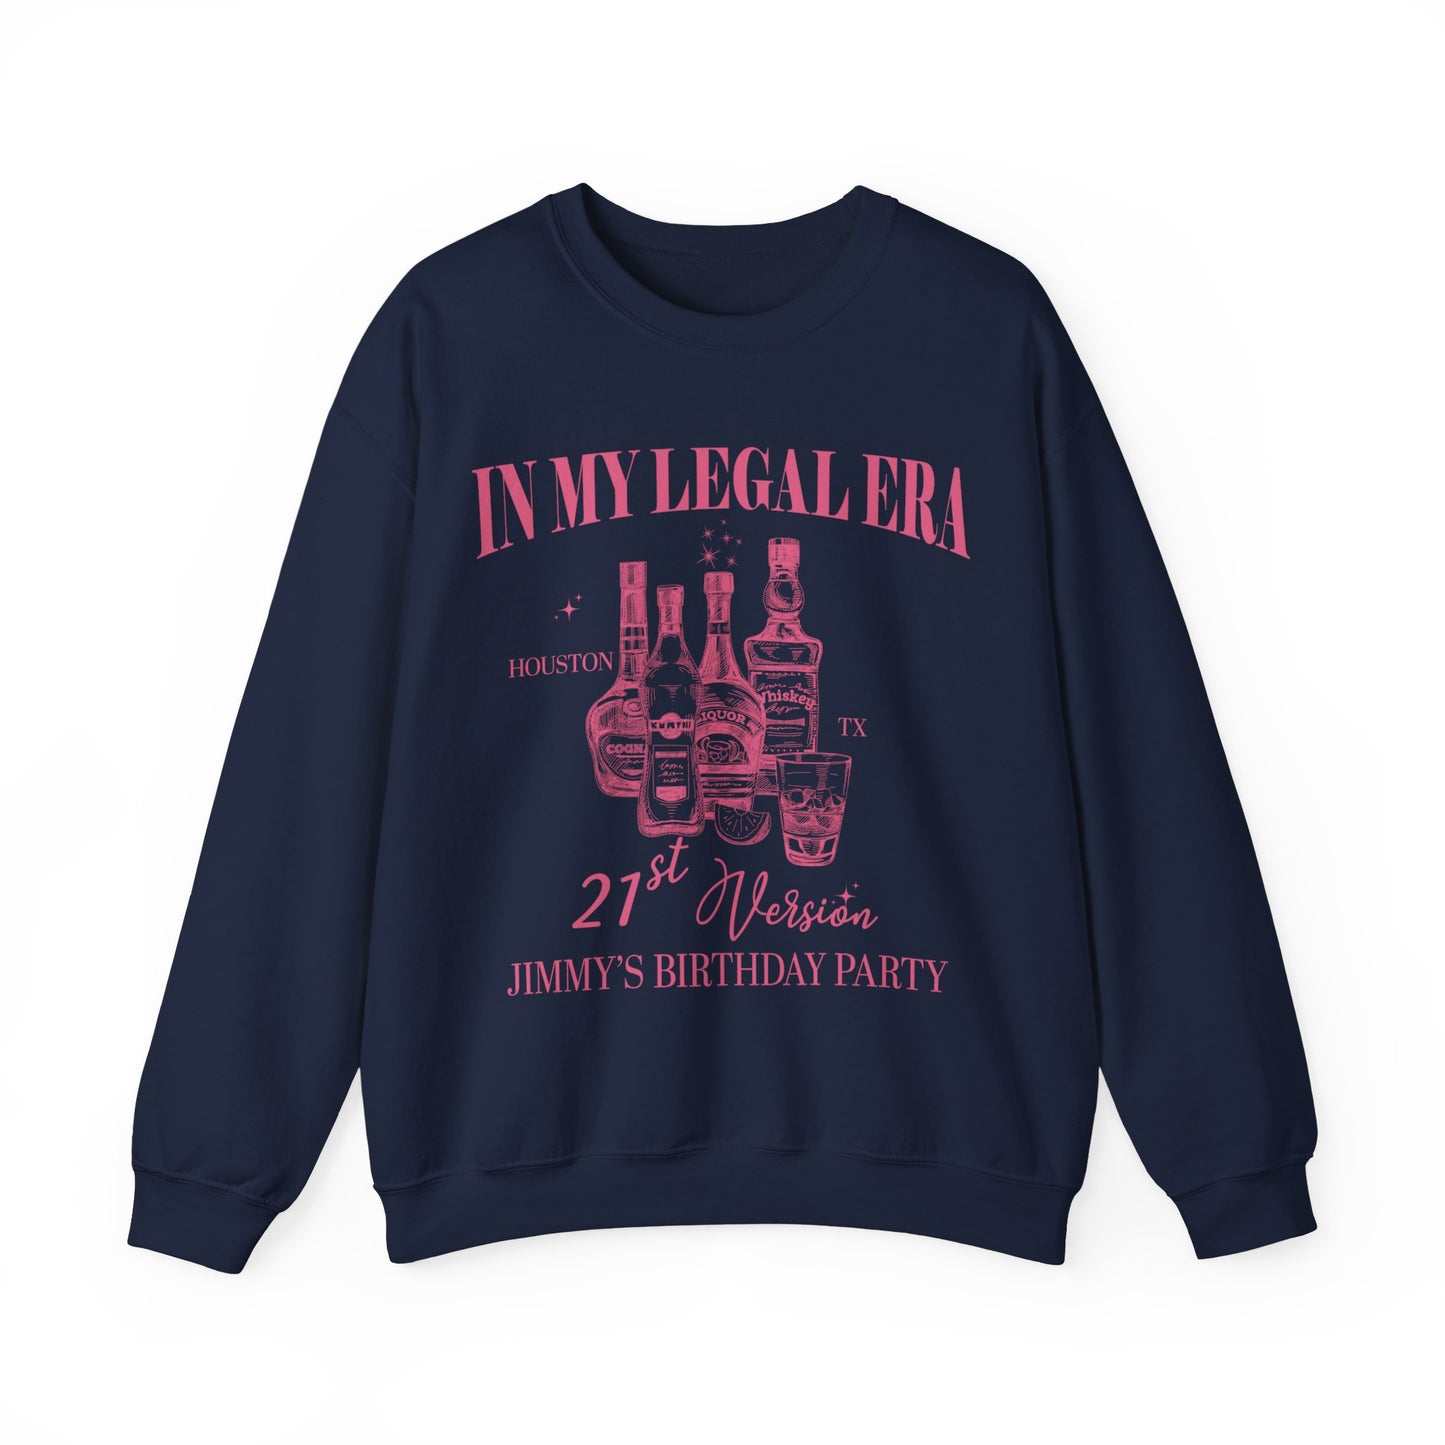 21st Birthday Sweatshirt, In My Legal Era Sweatshirt, Funny 21 st Birthday Sweatshirt, Gift for 21st Birthday Sweatshirt for Group, S1567